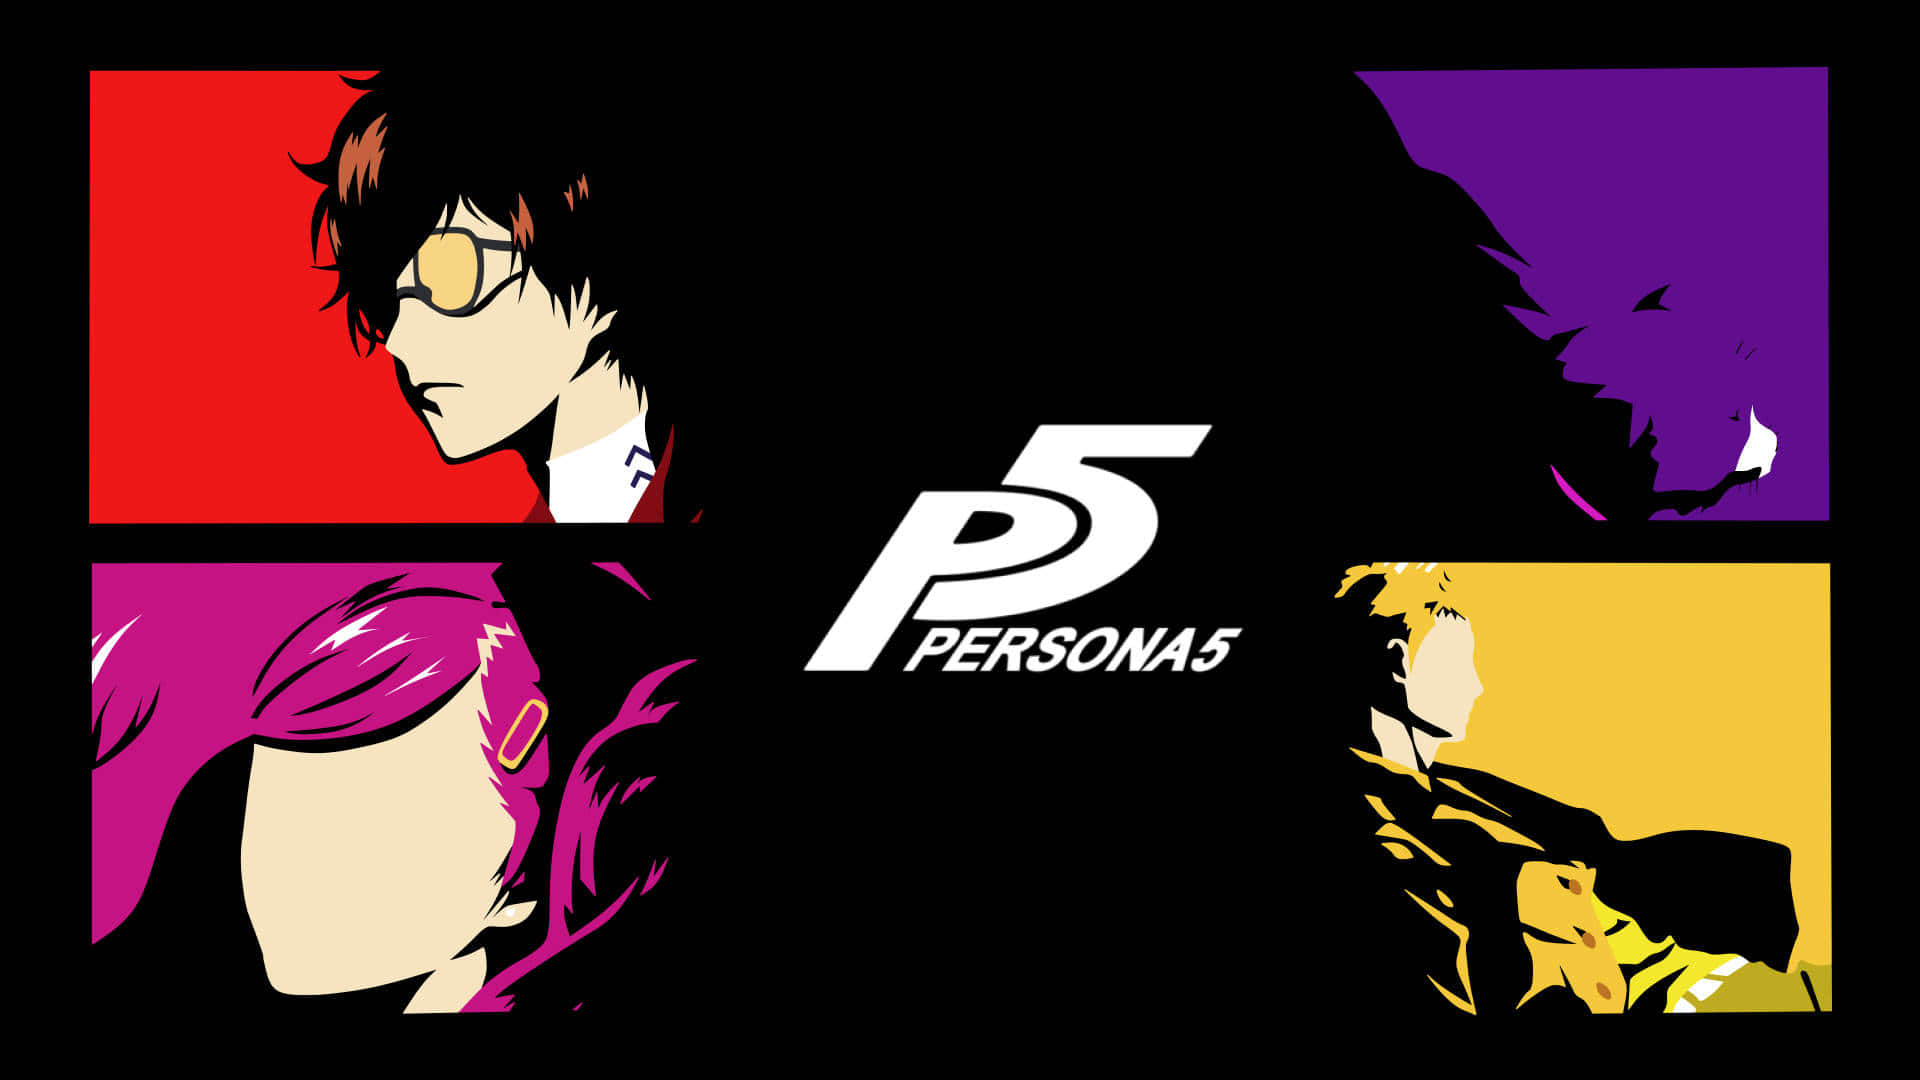 "The Stylish Persona 5 Logo" Wallpaper